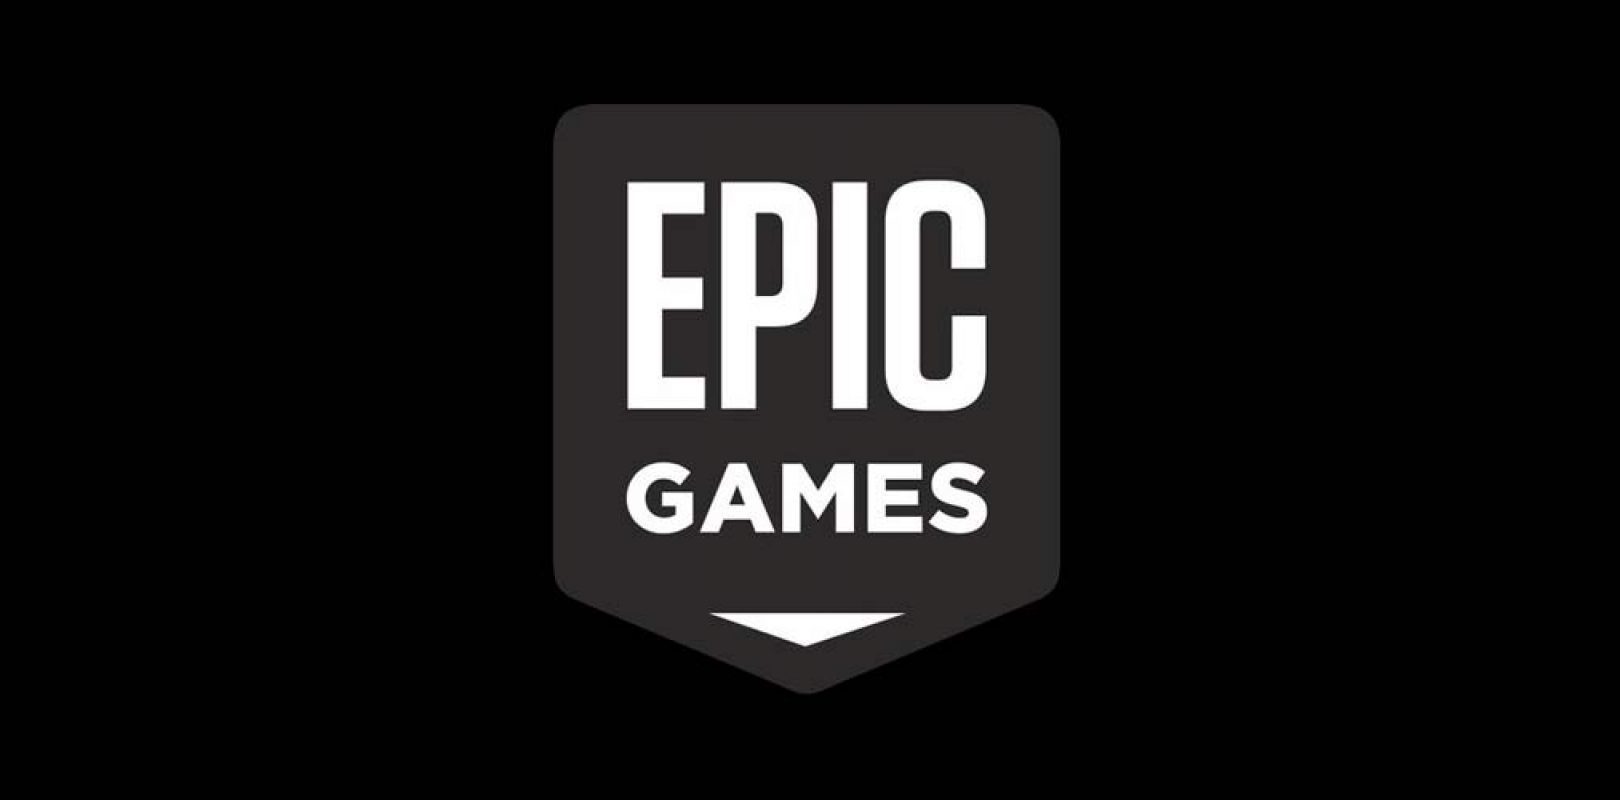 Epic Games está aberta para jogos NFT/Blockchain após banimento da Steam